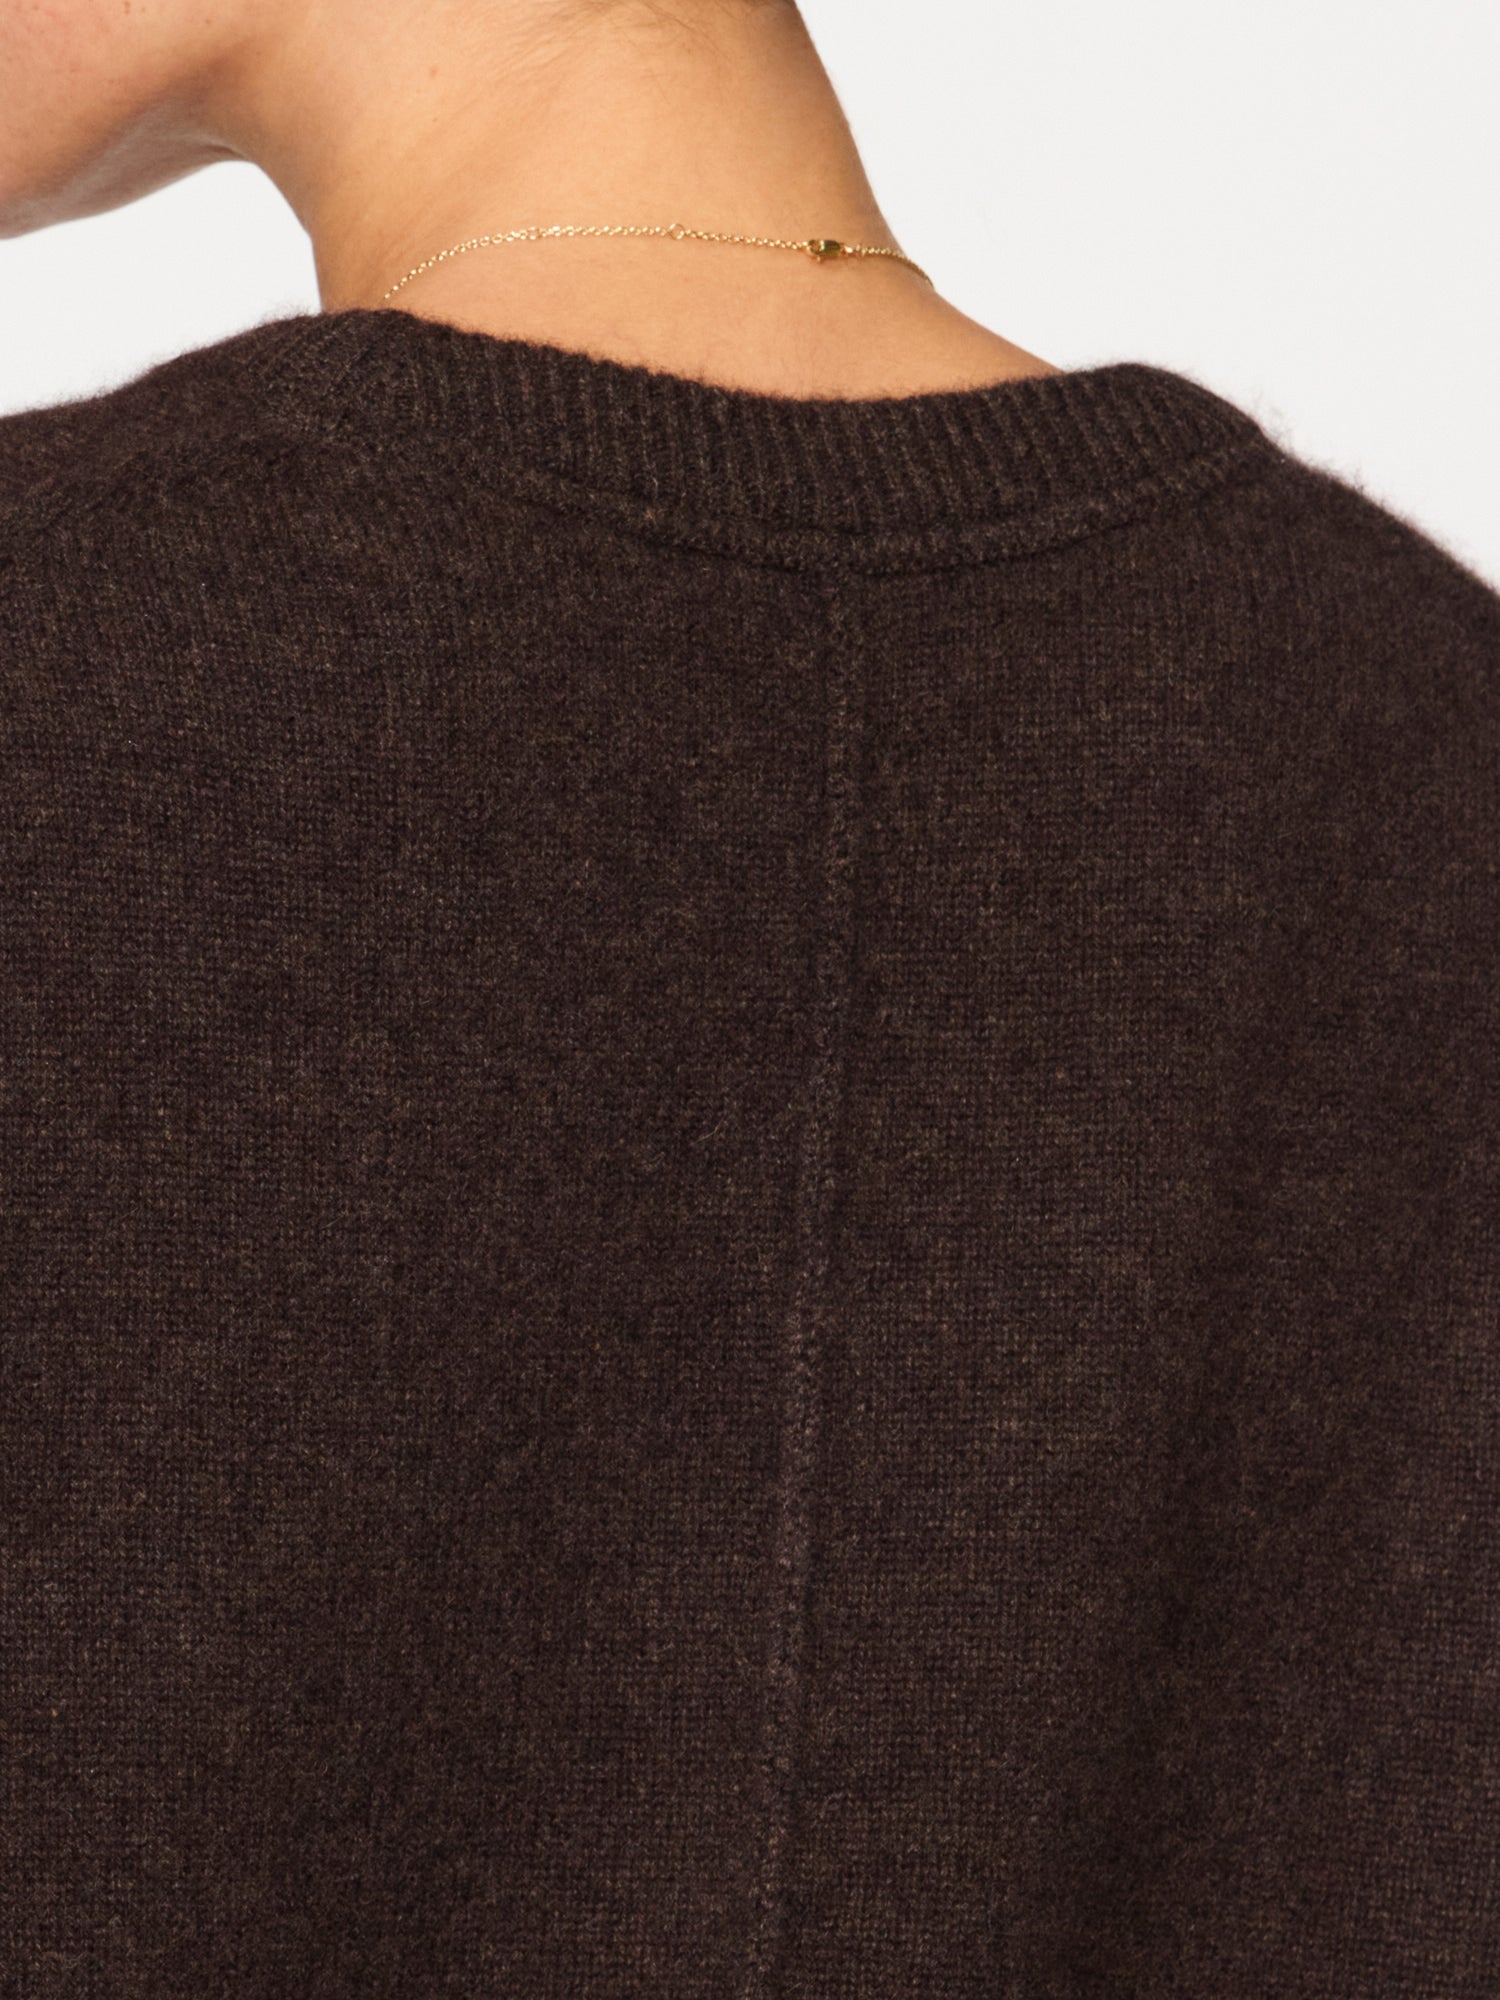 Everyday cashmere crewneck brown sweater close up